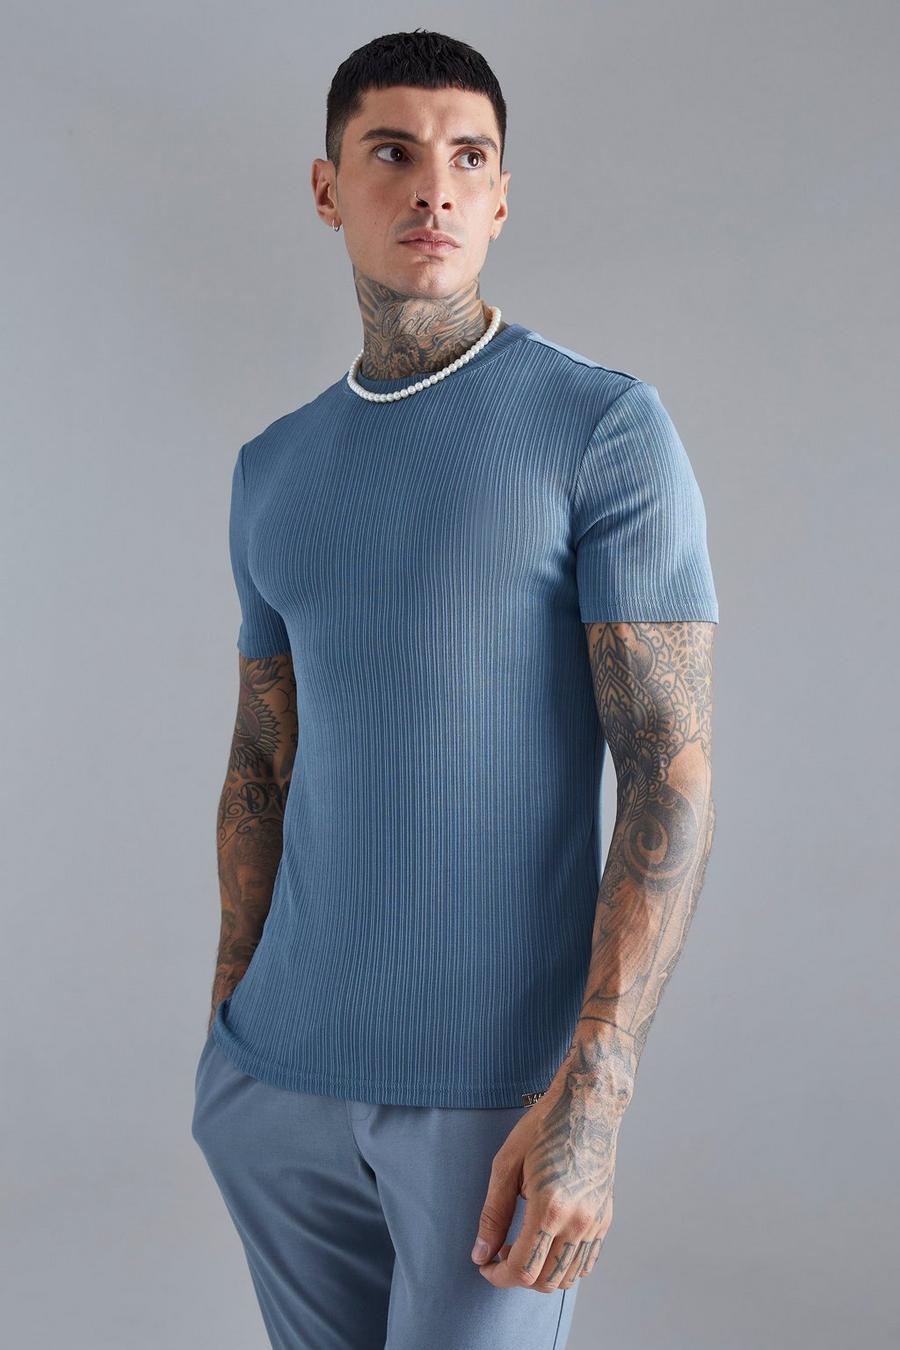 Camiseta texturizada ajustada al músculo, Dusty blue azzurro